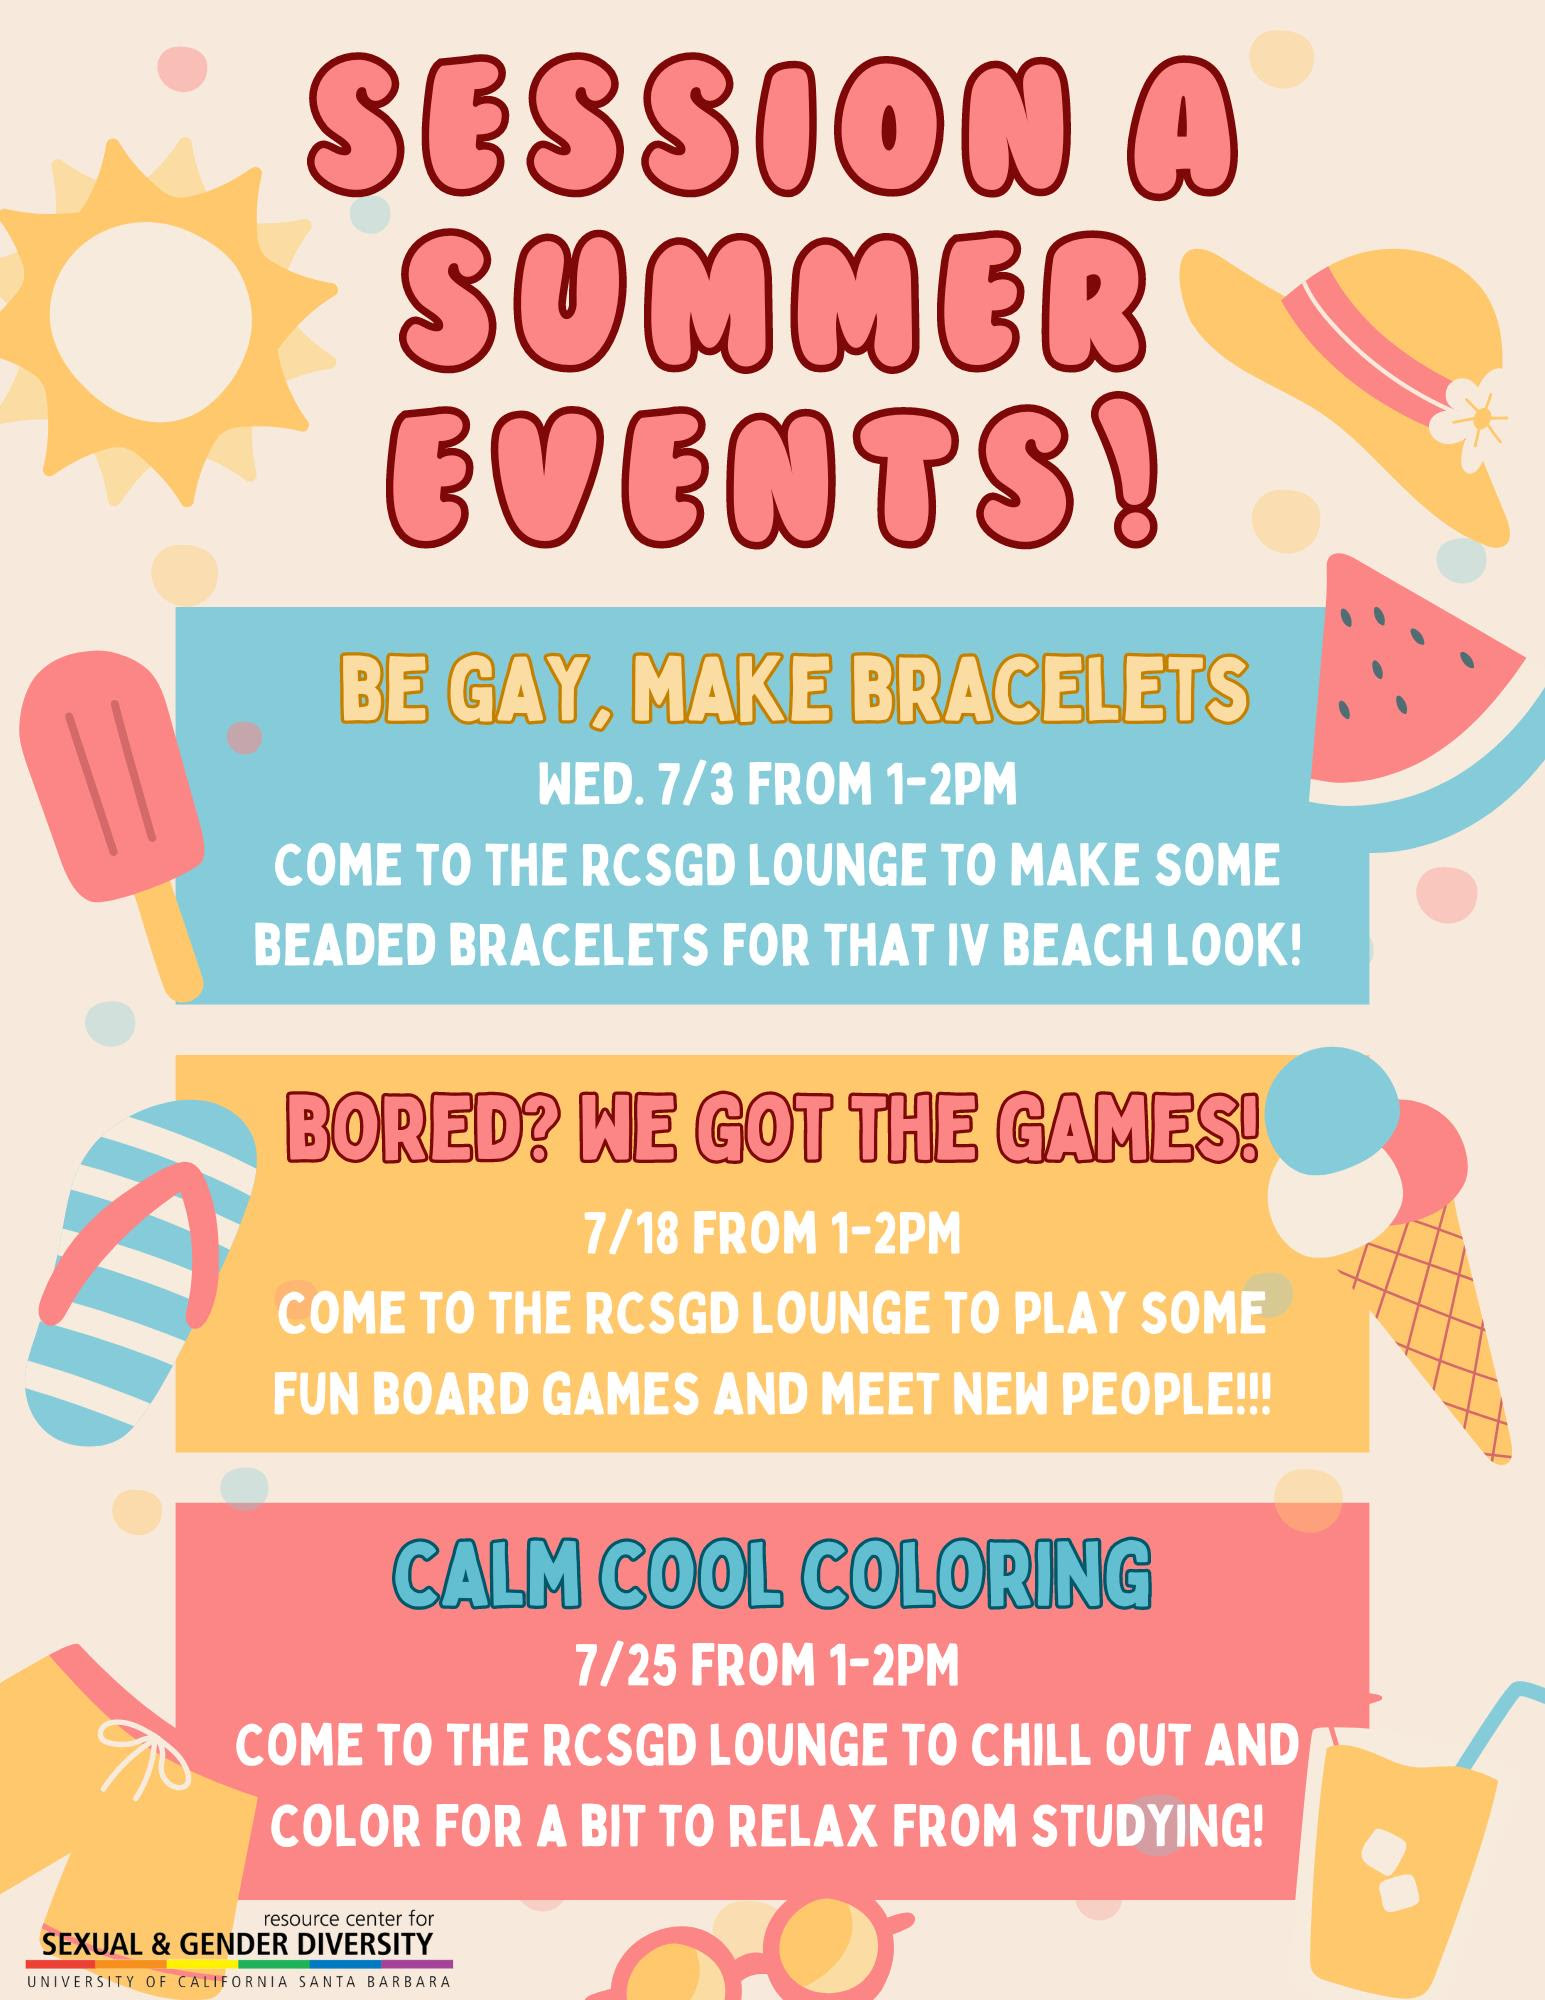 Bracelet making event July 3rd, Board Game Event July 18th, Coloring Event July 25th  all from 1-2pm in the RCSGD lounge